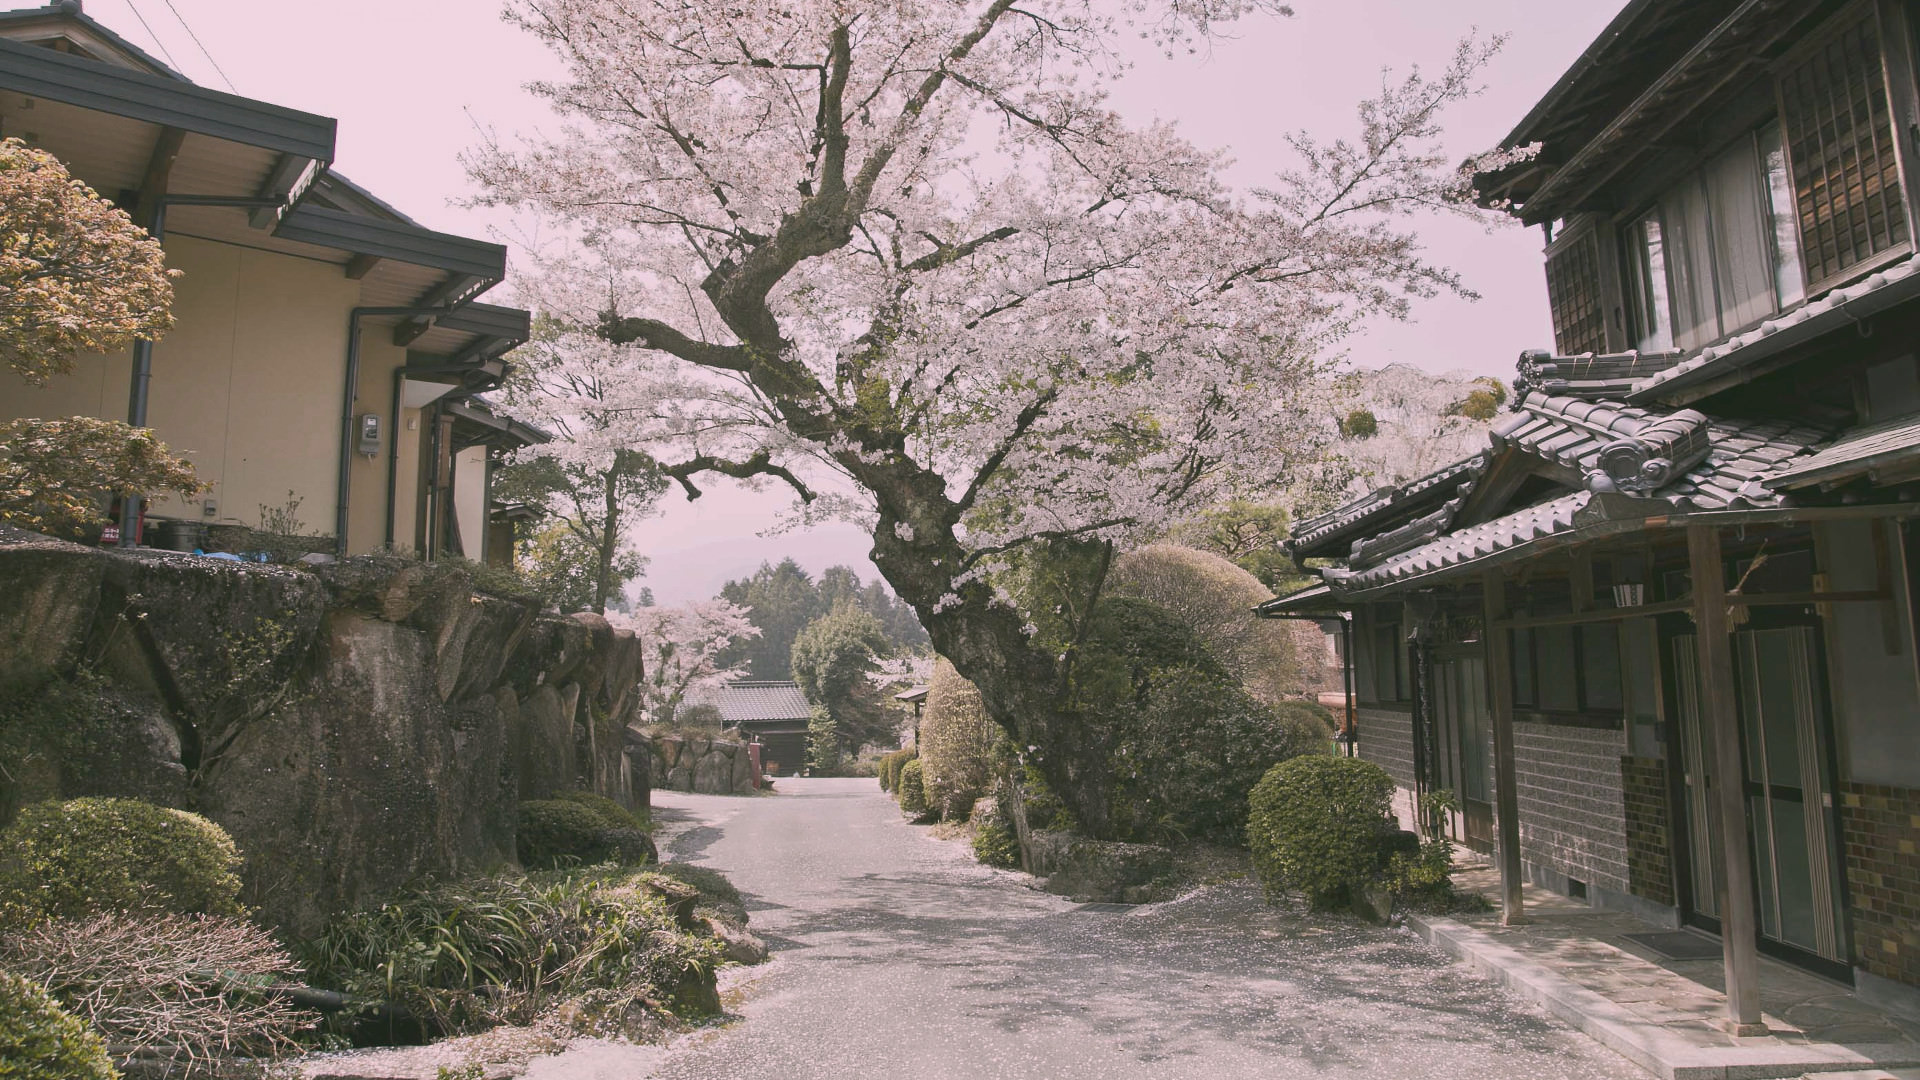 General 1920x1080 Japan flowers cherry blossom trees road village